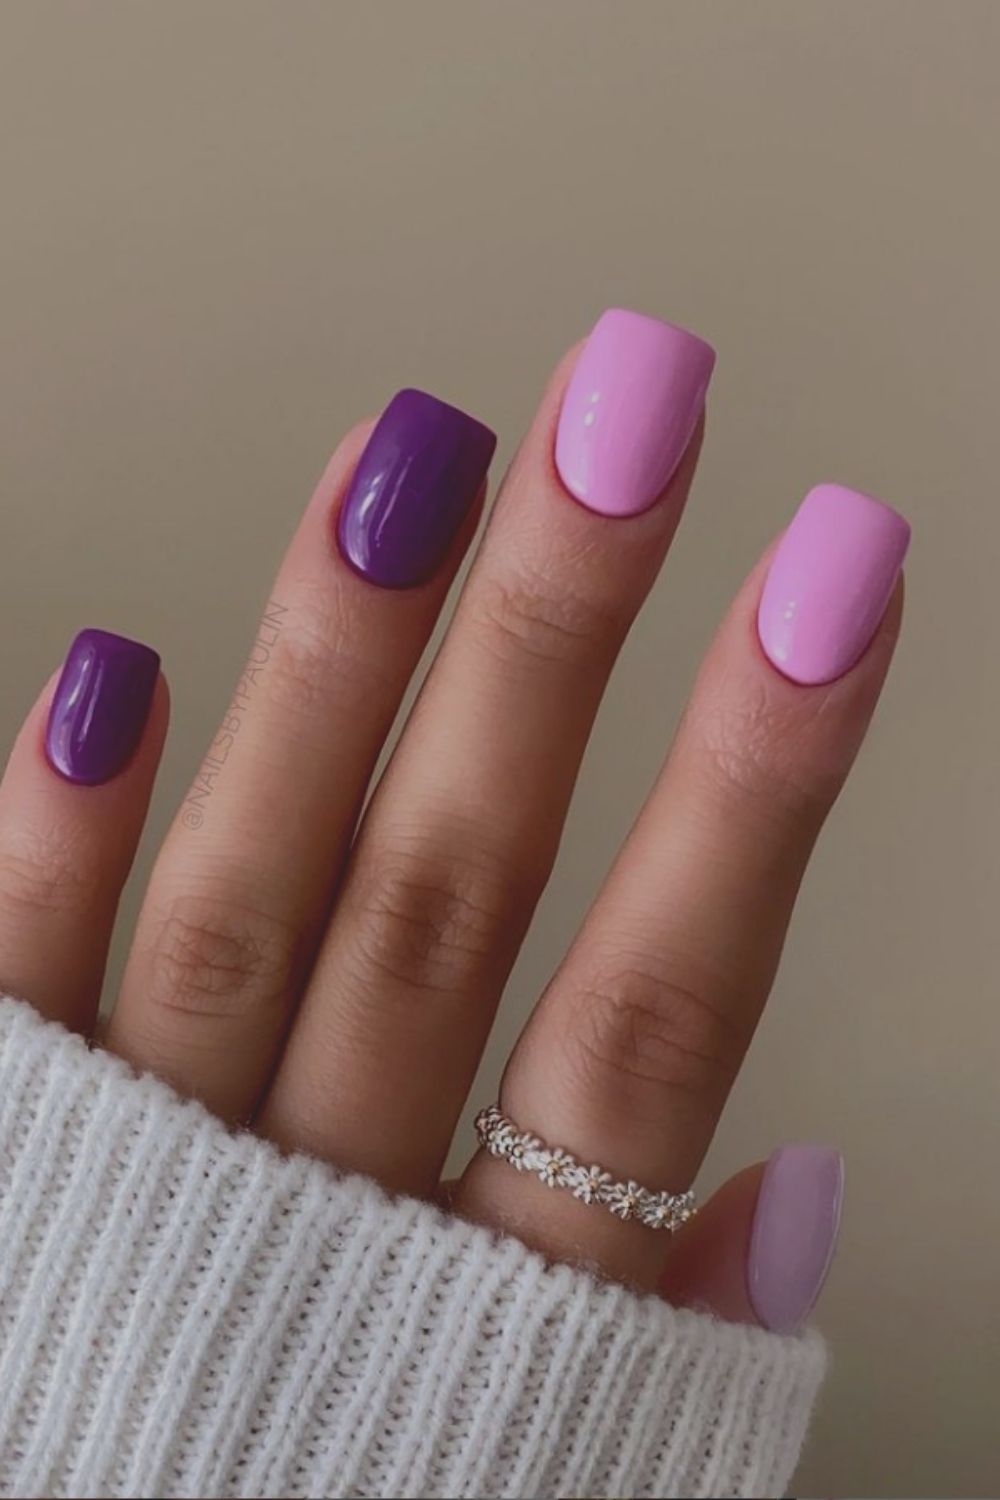 Pink and purple nail art